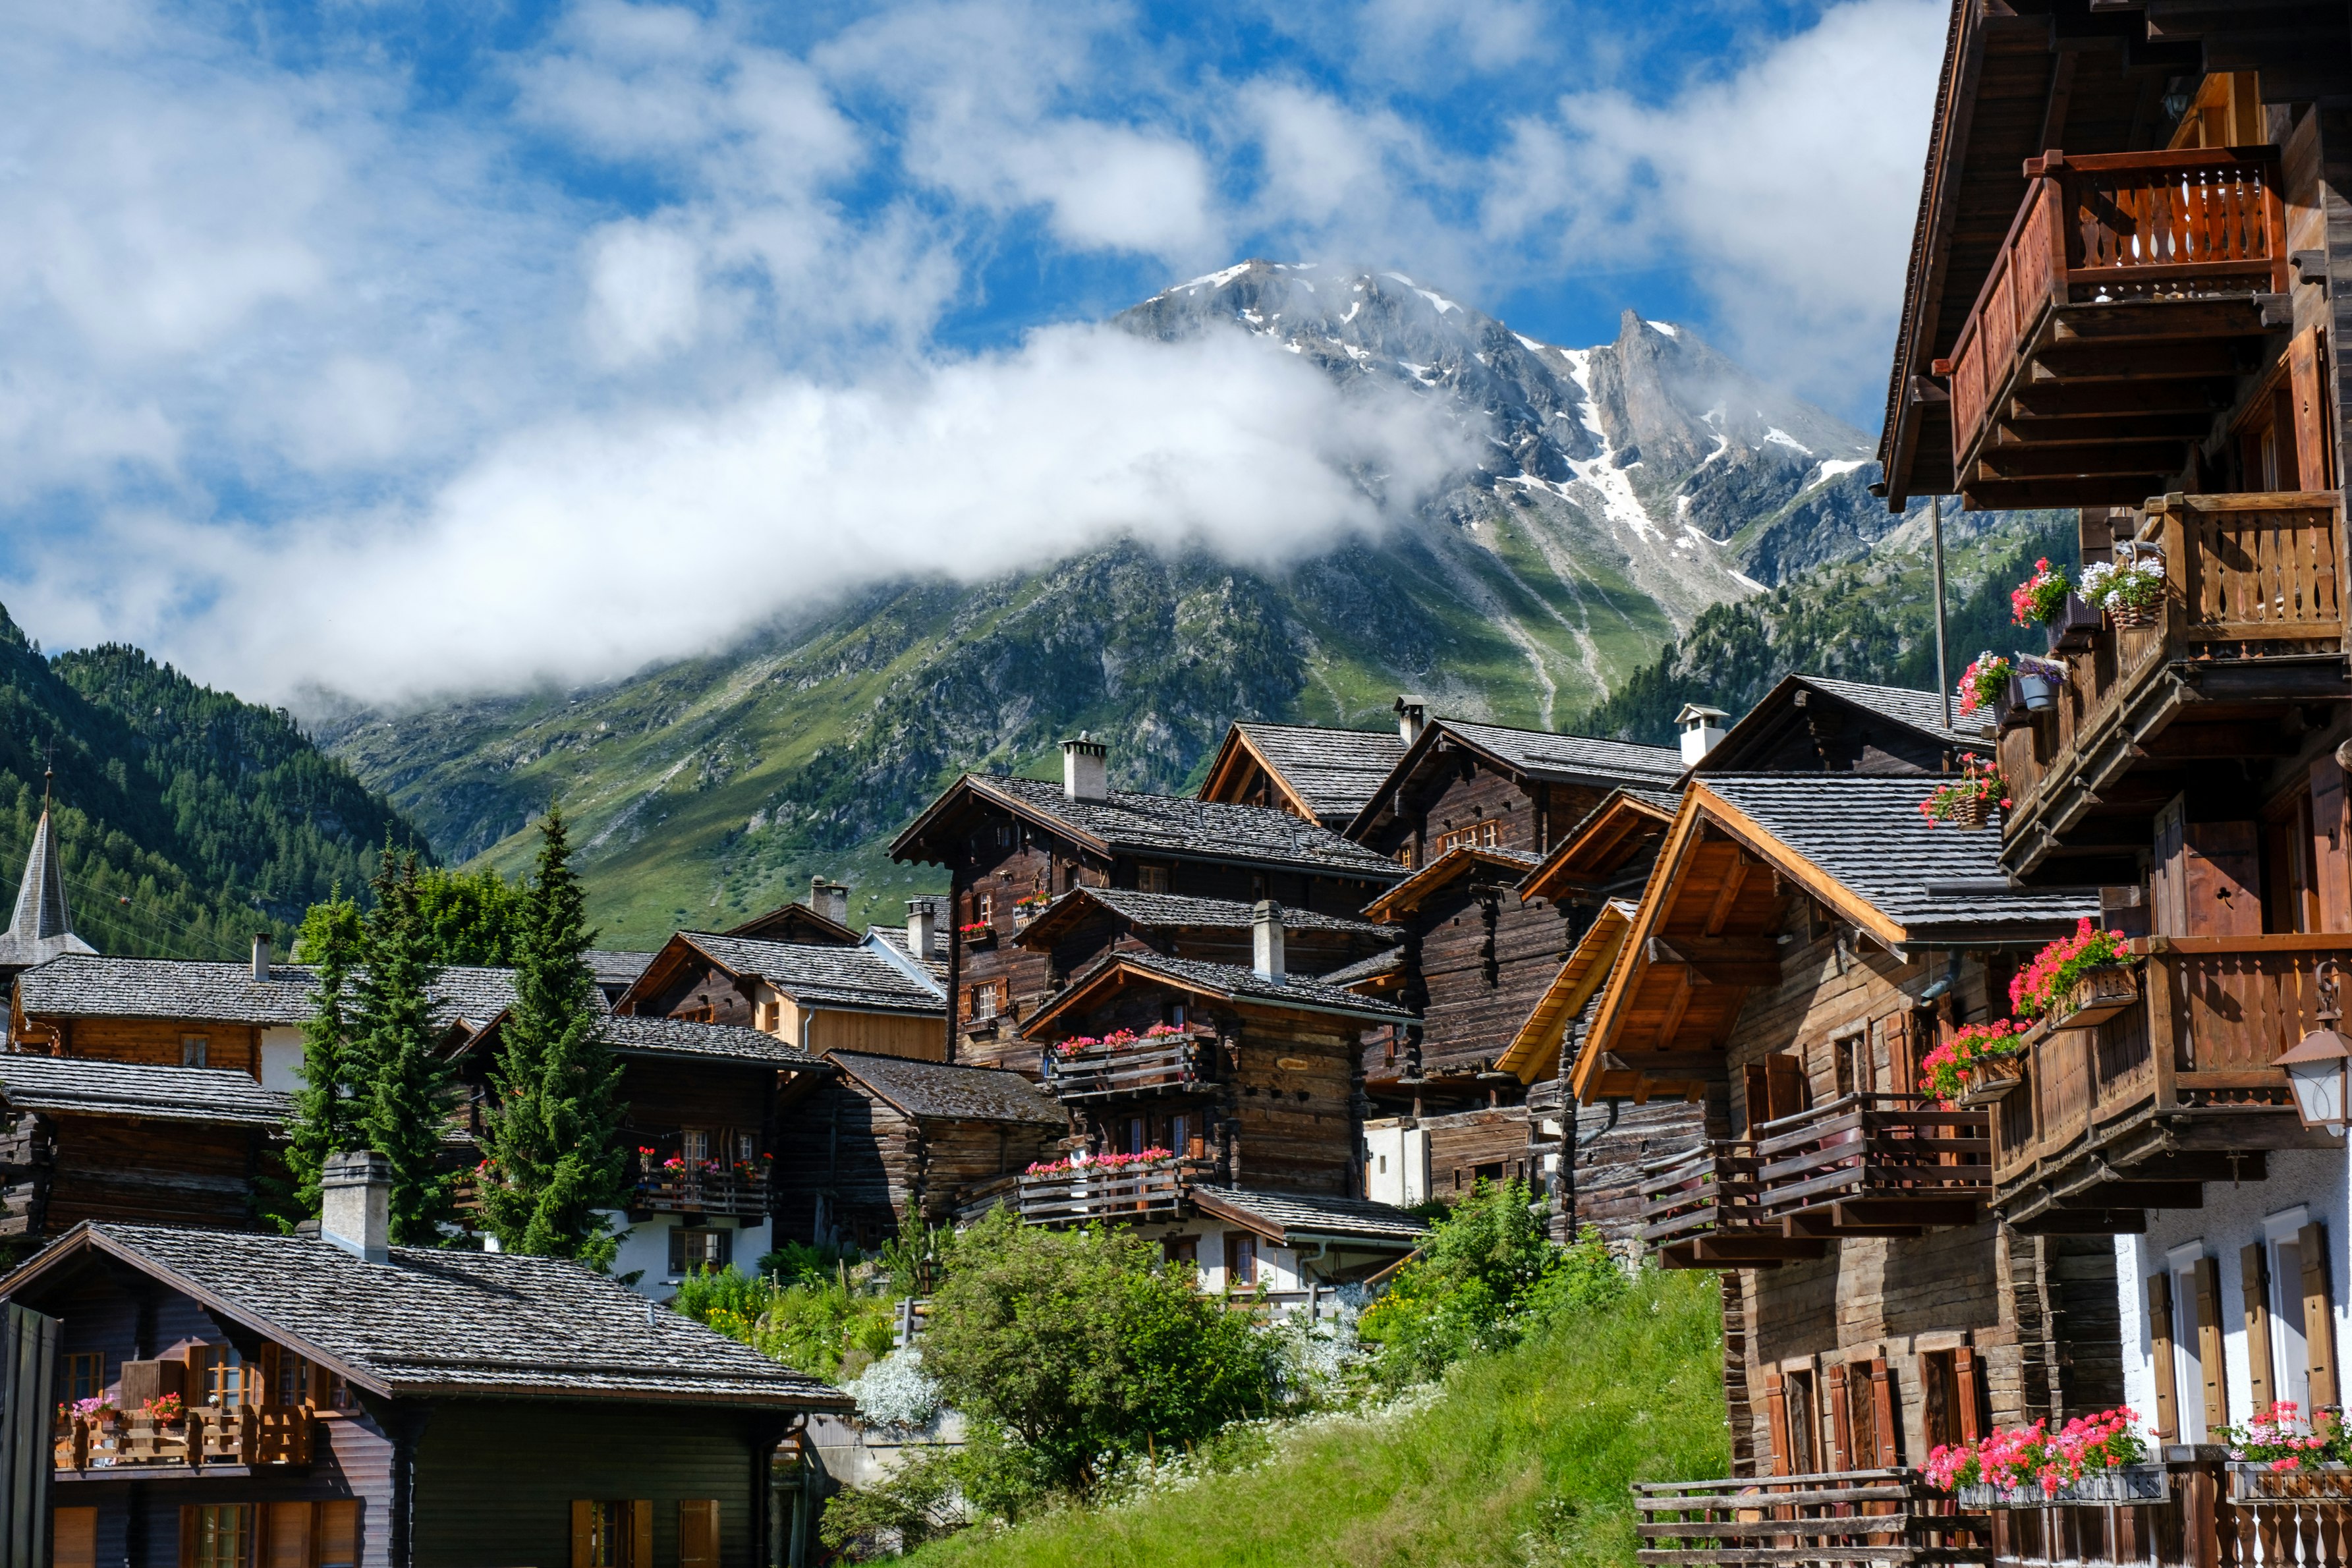 Acheter un bien immobilier en Suisse